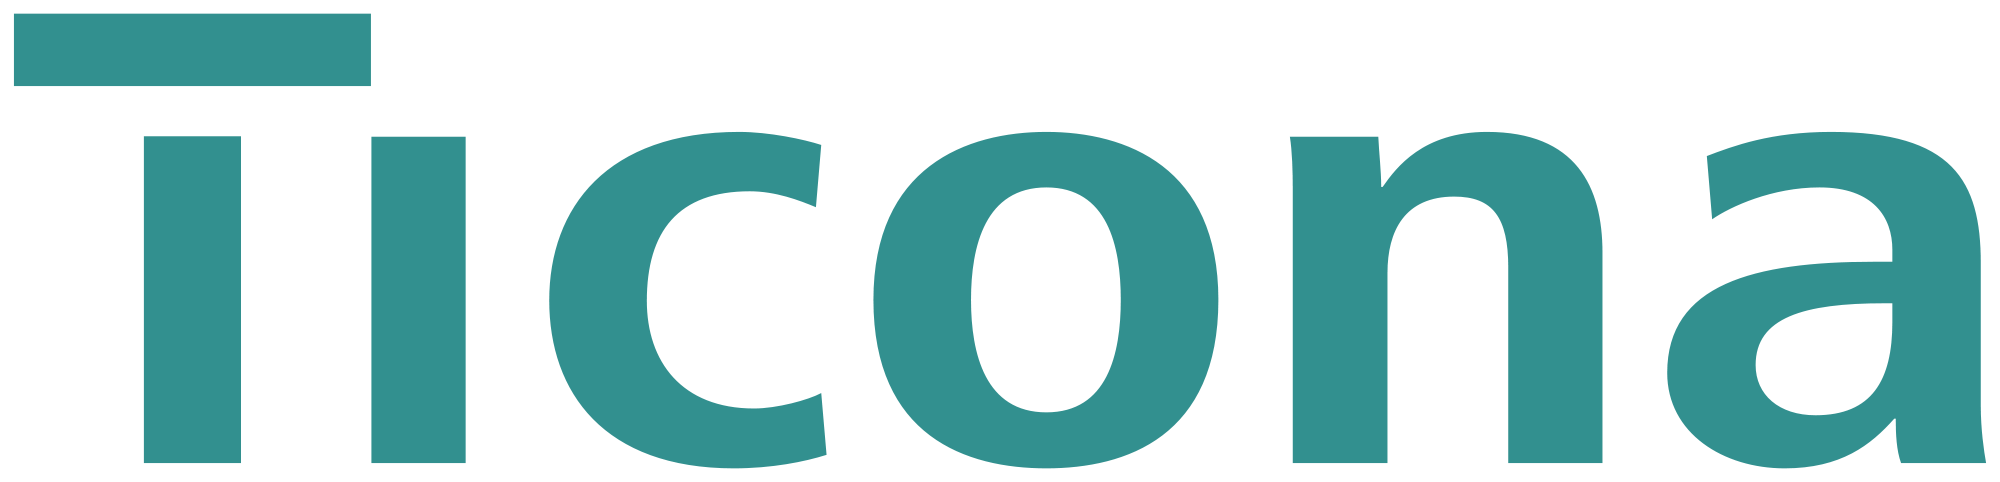 2000px-Ticona_logo.svg